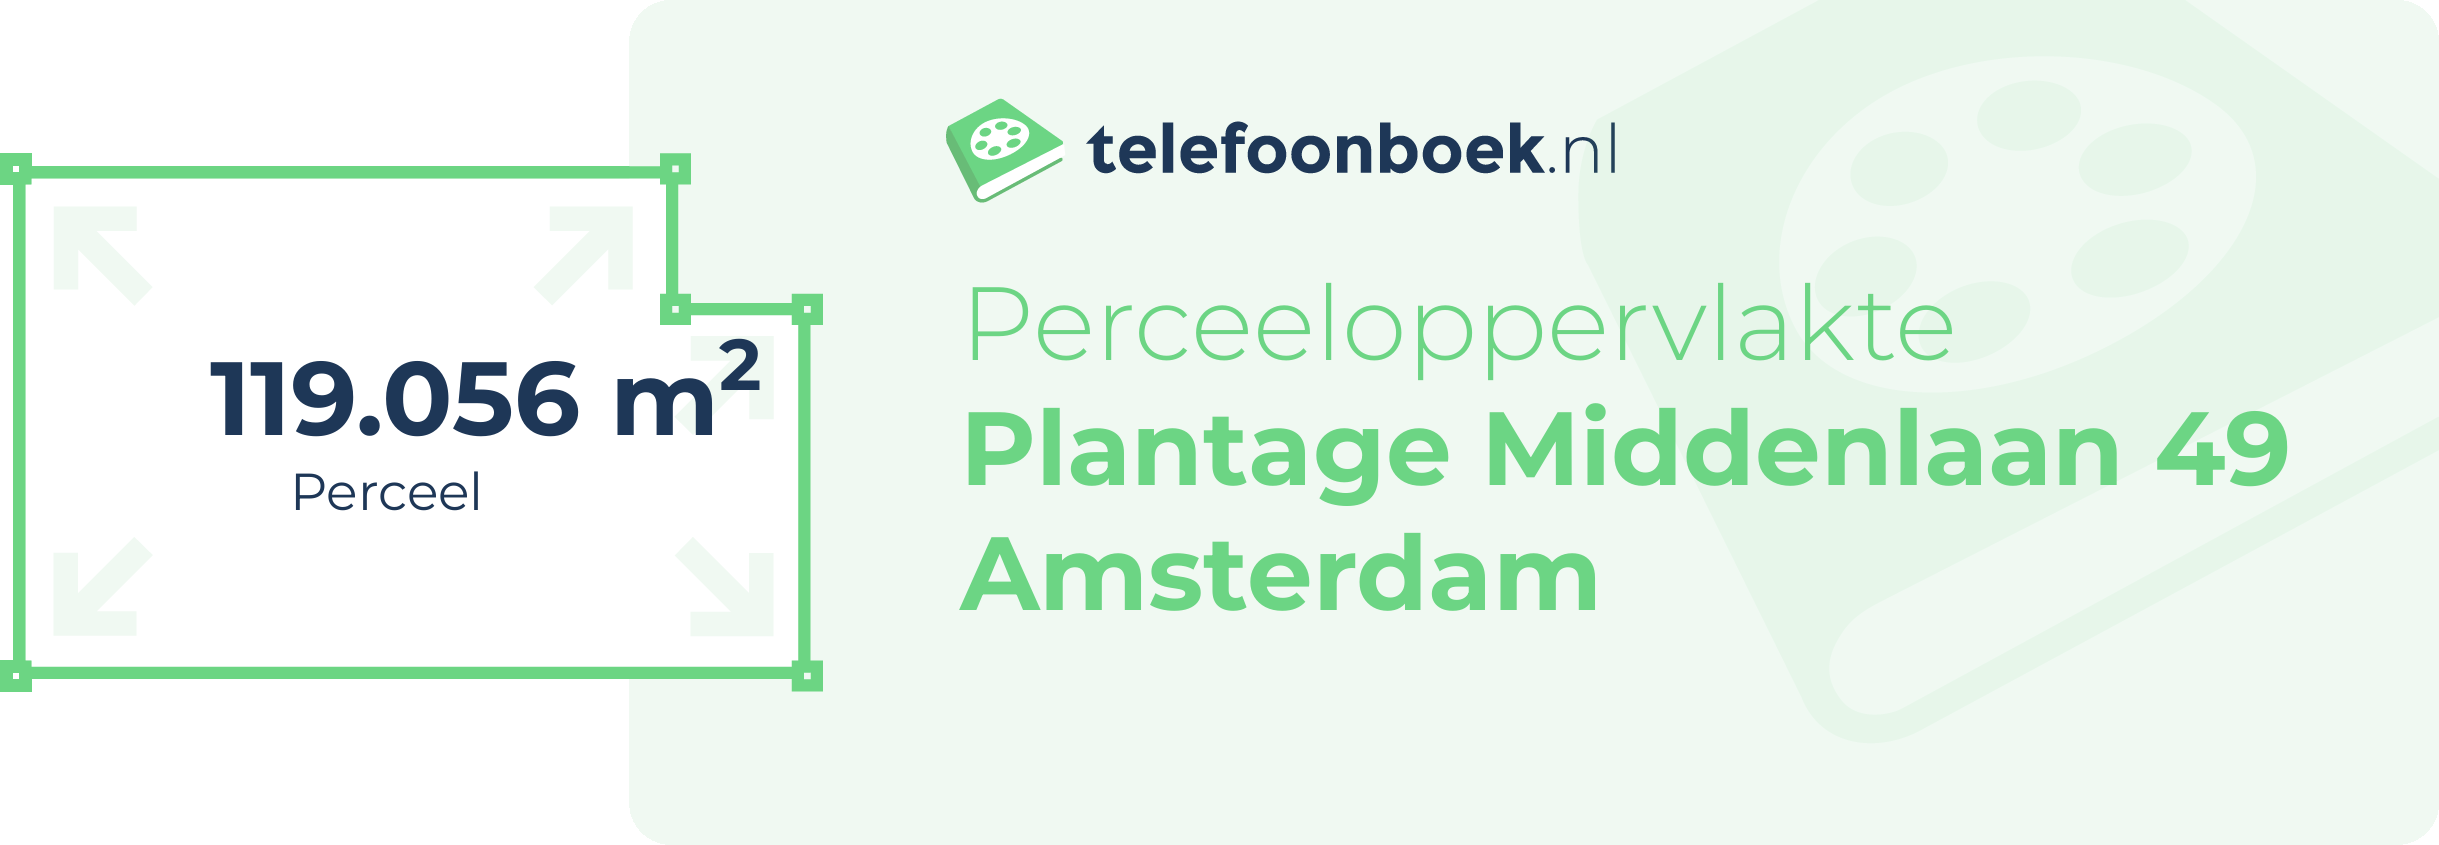 Perceeloppervlakte Plantage Middenlaan 49 Amsterdam